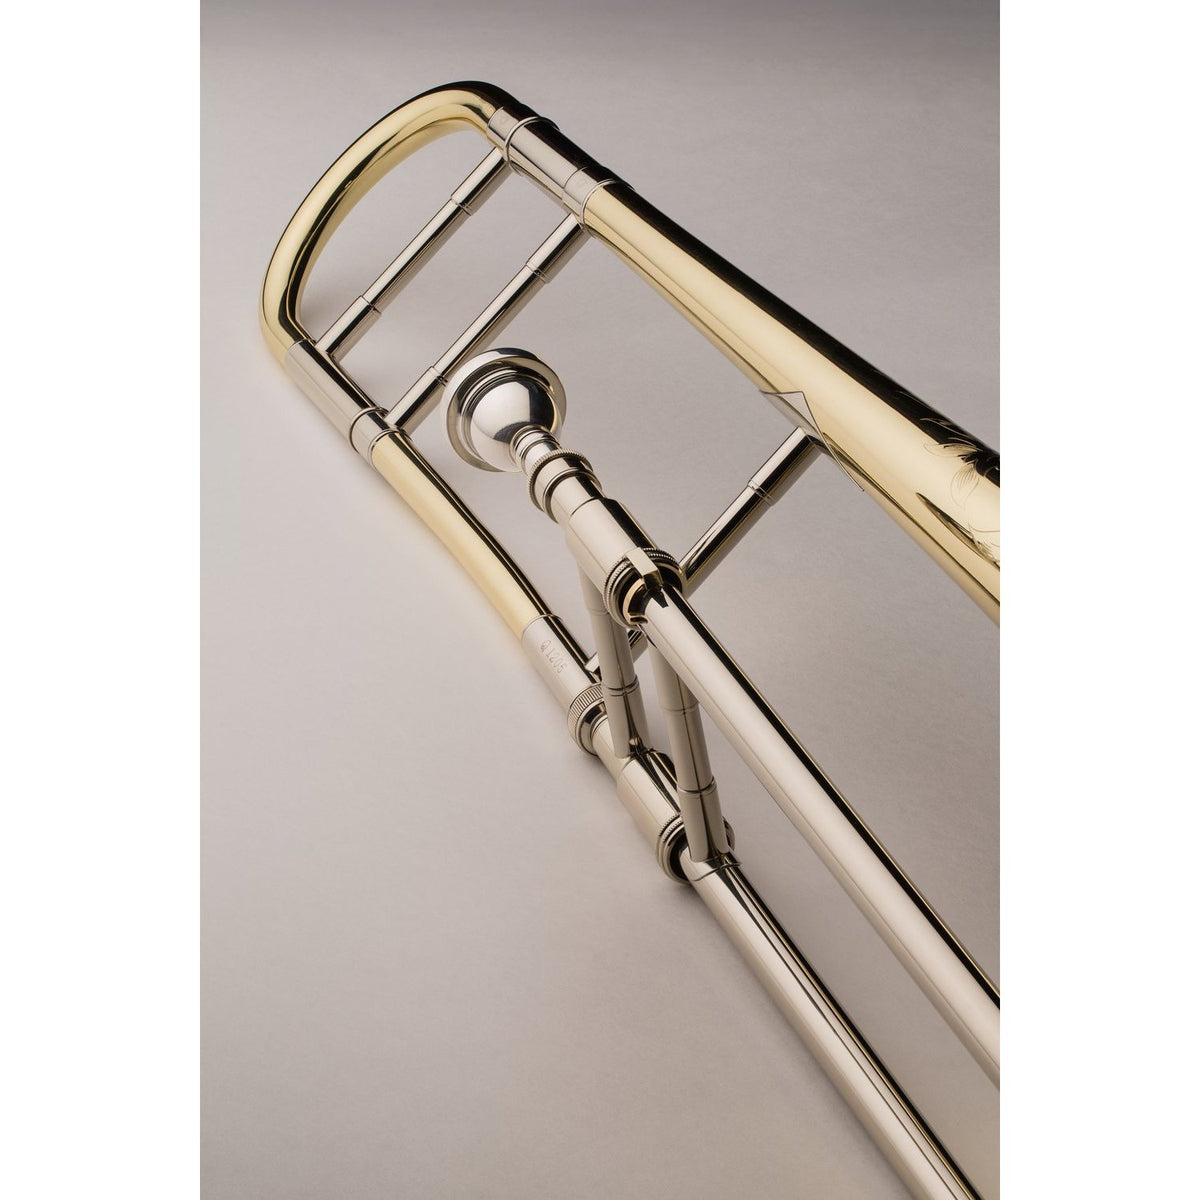 S.E. Shires - Q33 - Q Series Small Bore Tenor Trombone-Trombone-S.E. Shires-Music Elements